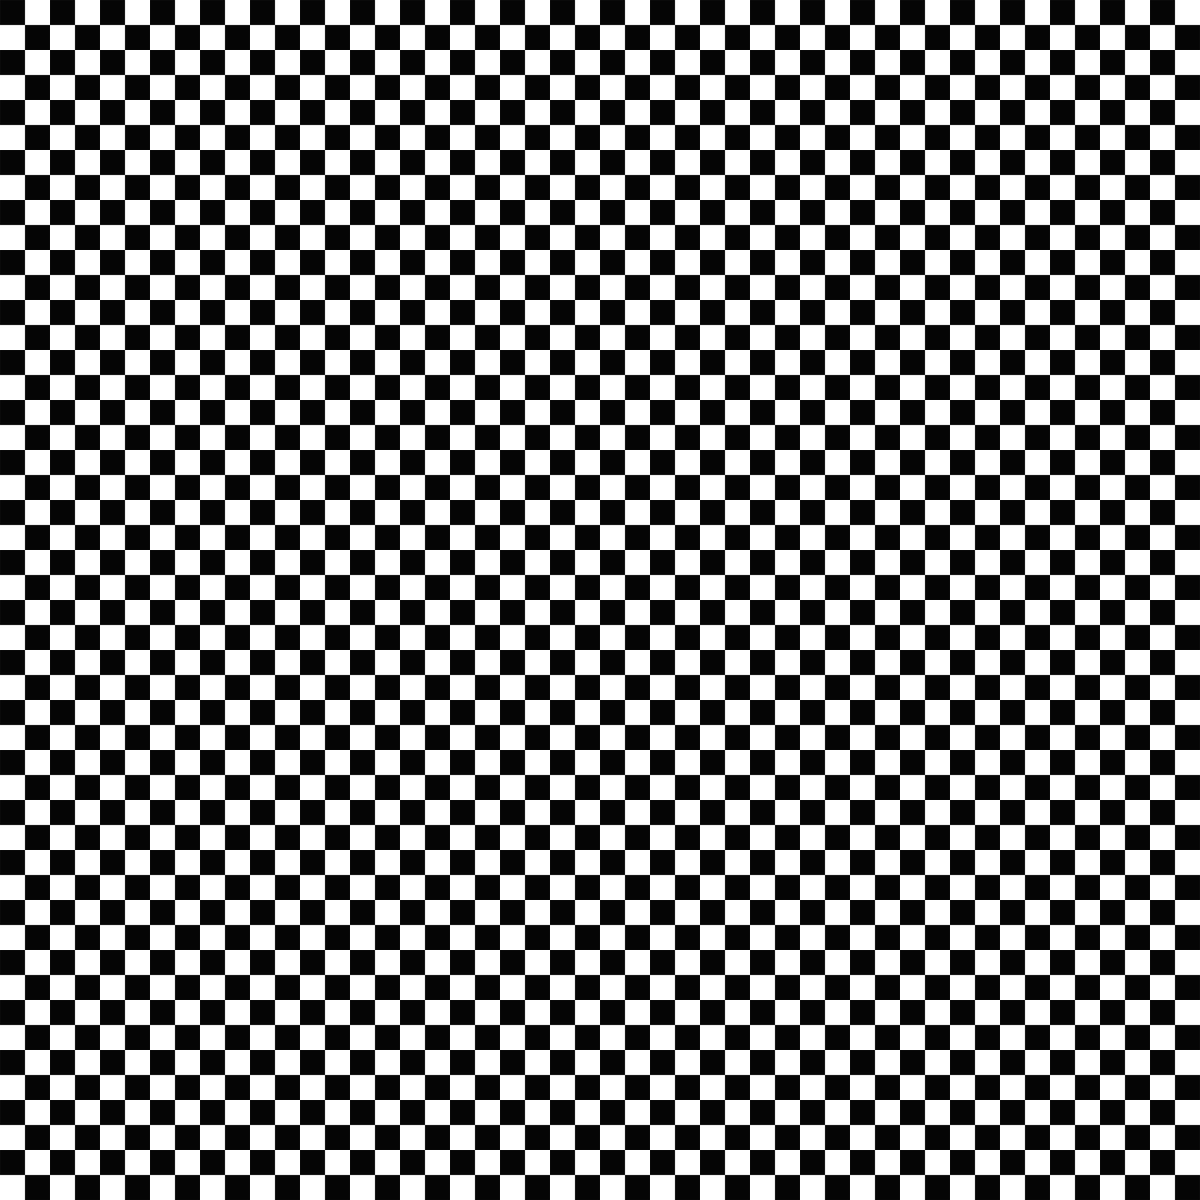 Go Back Images For Black And White Checkered Border Clip Art 1200x1200